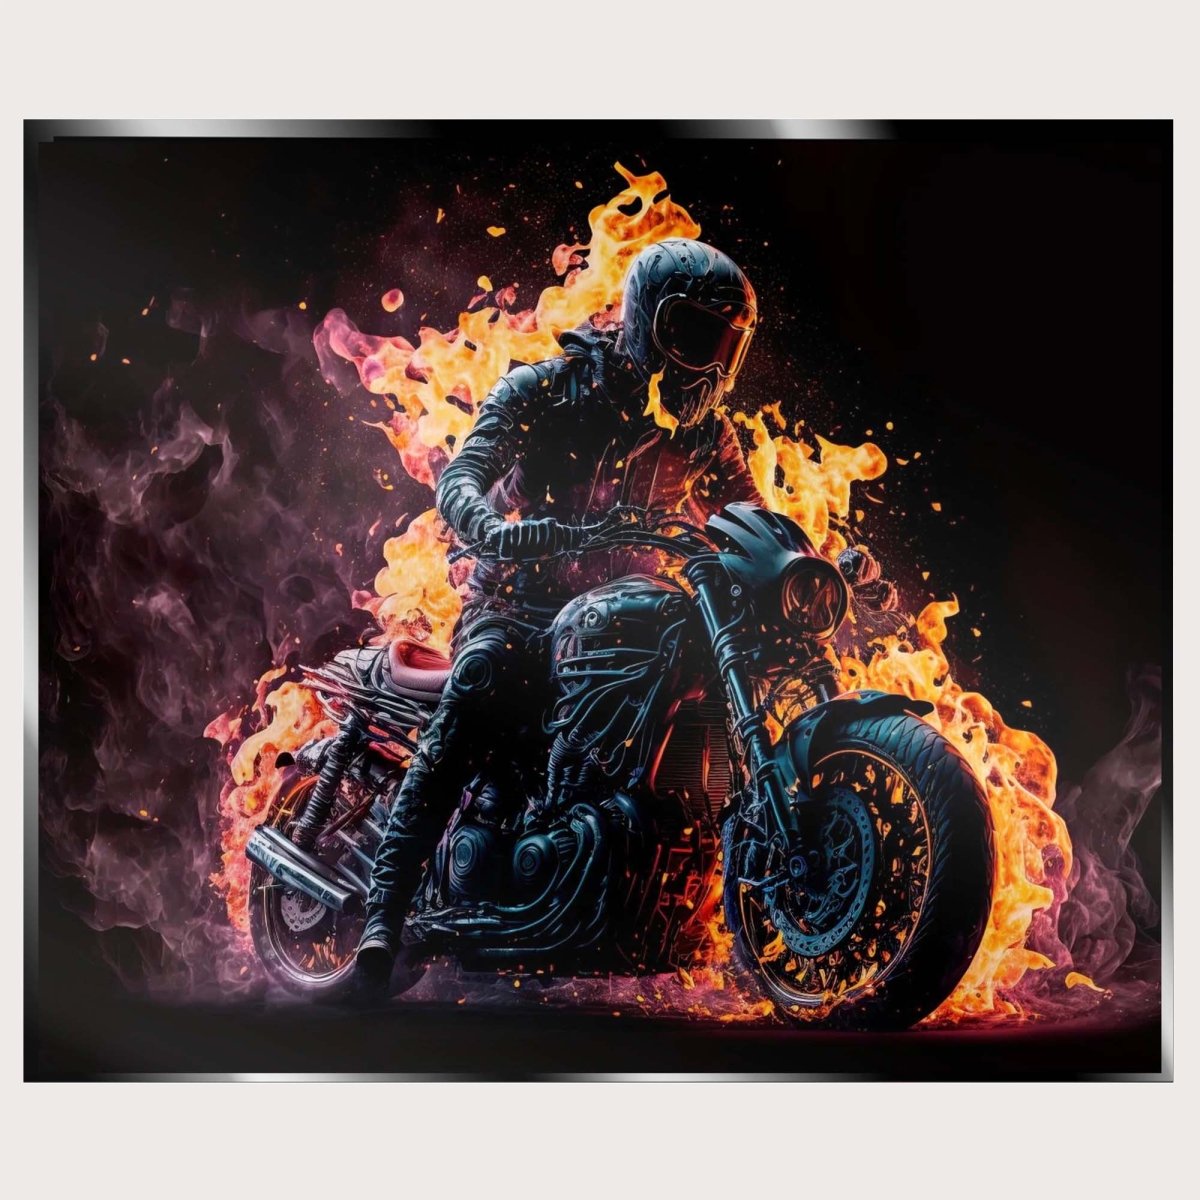 Illuminated Wall Art - Flaming Motorbiker - madaboutneon